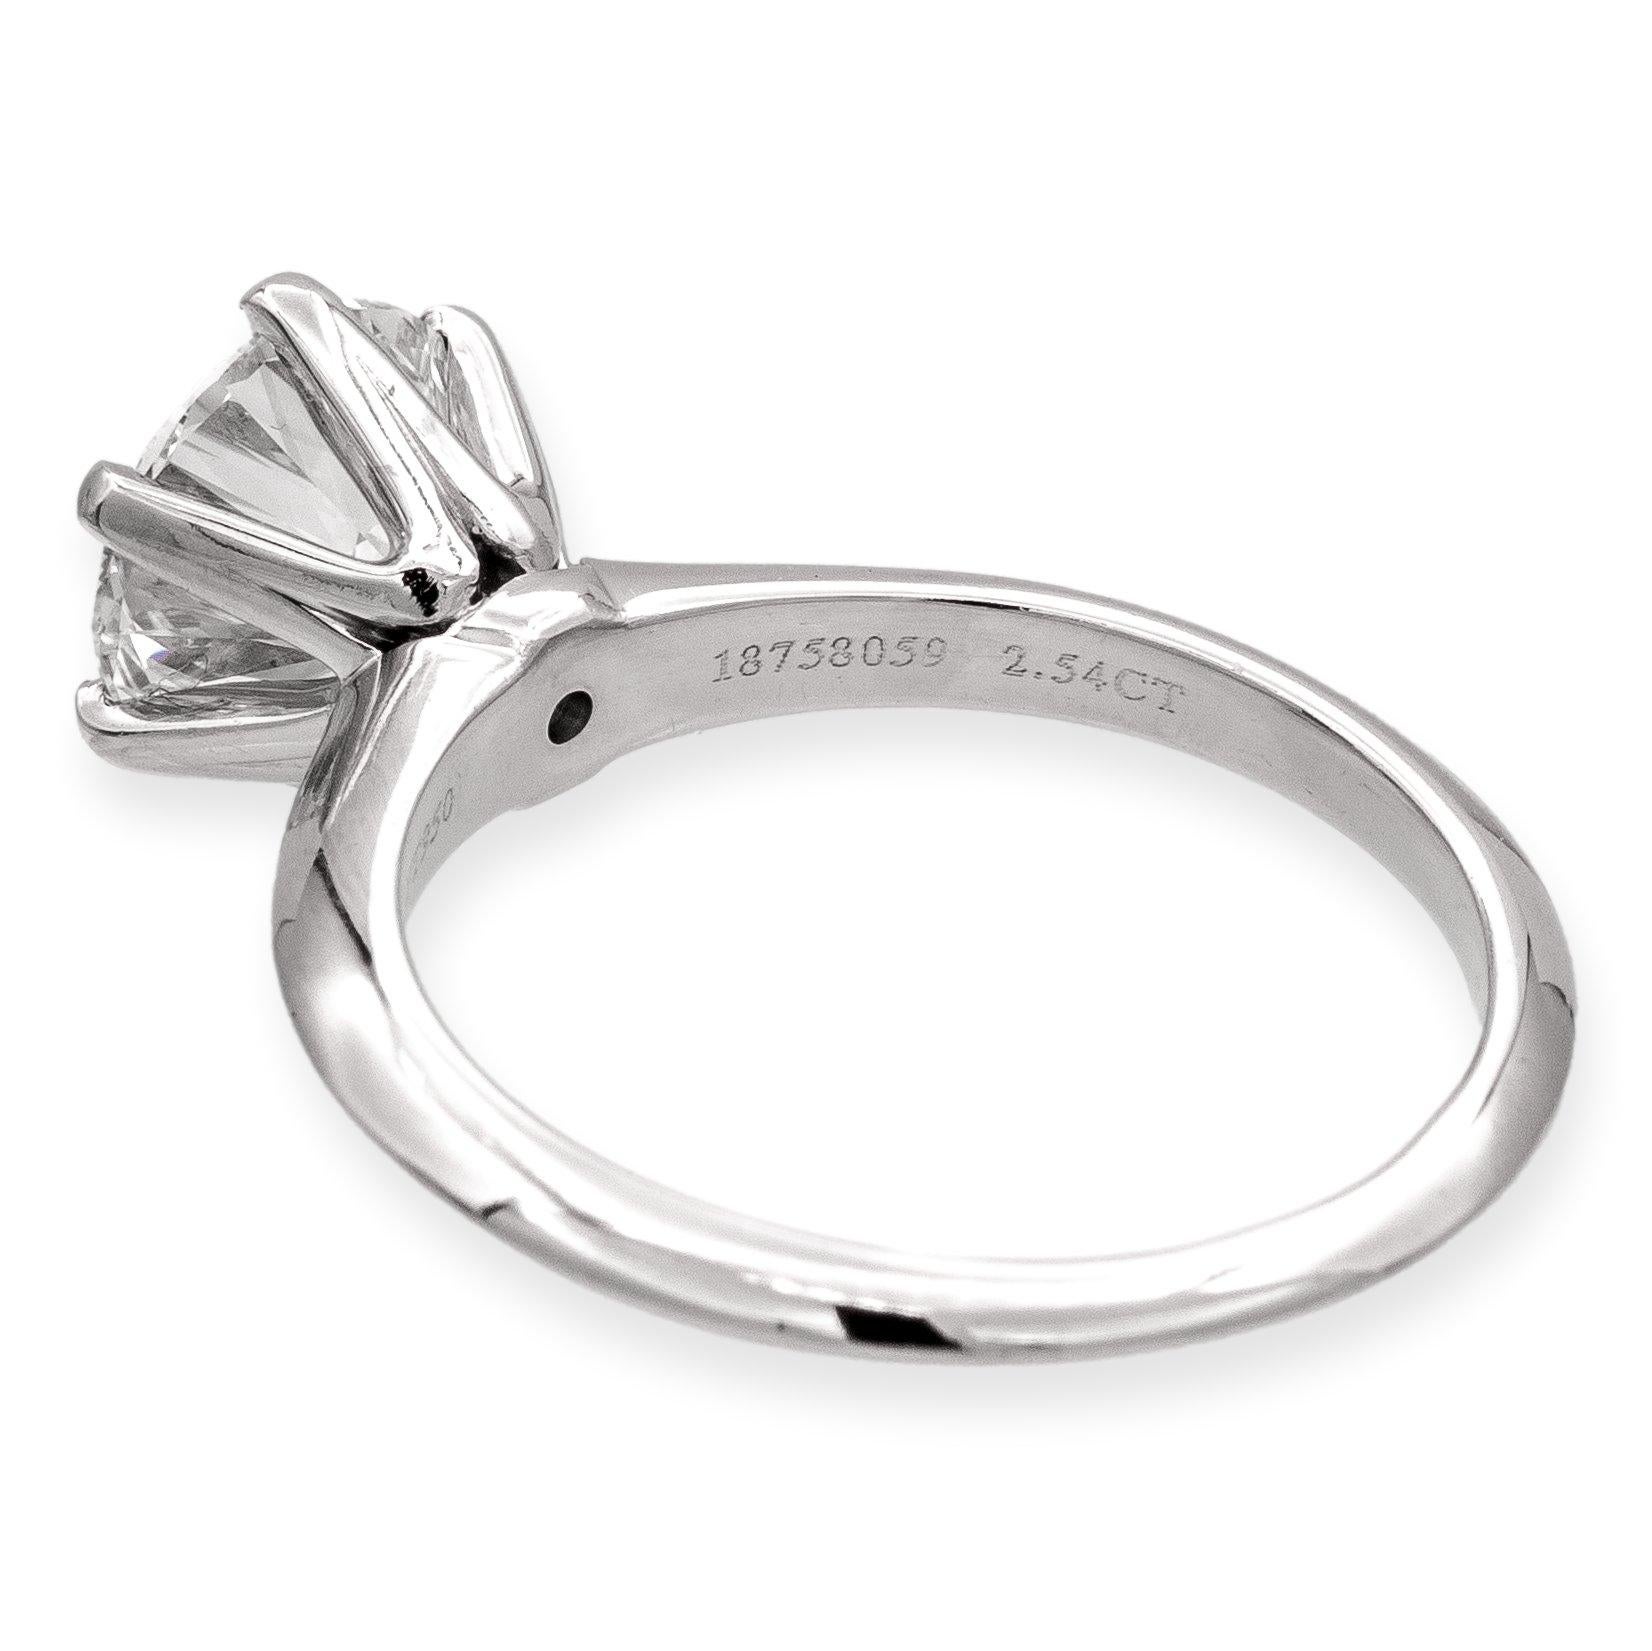 Brilliant Cut Tiffany & Co. Platinum Solitaire Round Diamond Engagement Ring 2.54Ct HVS1